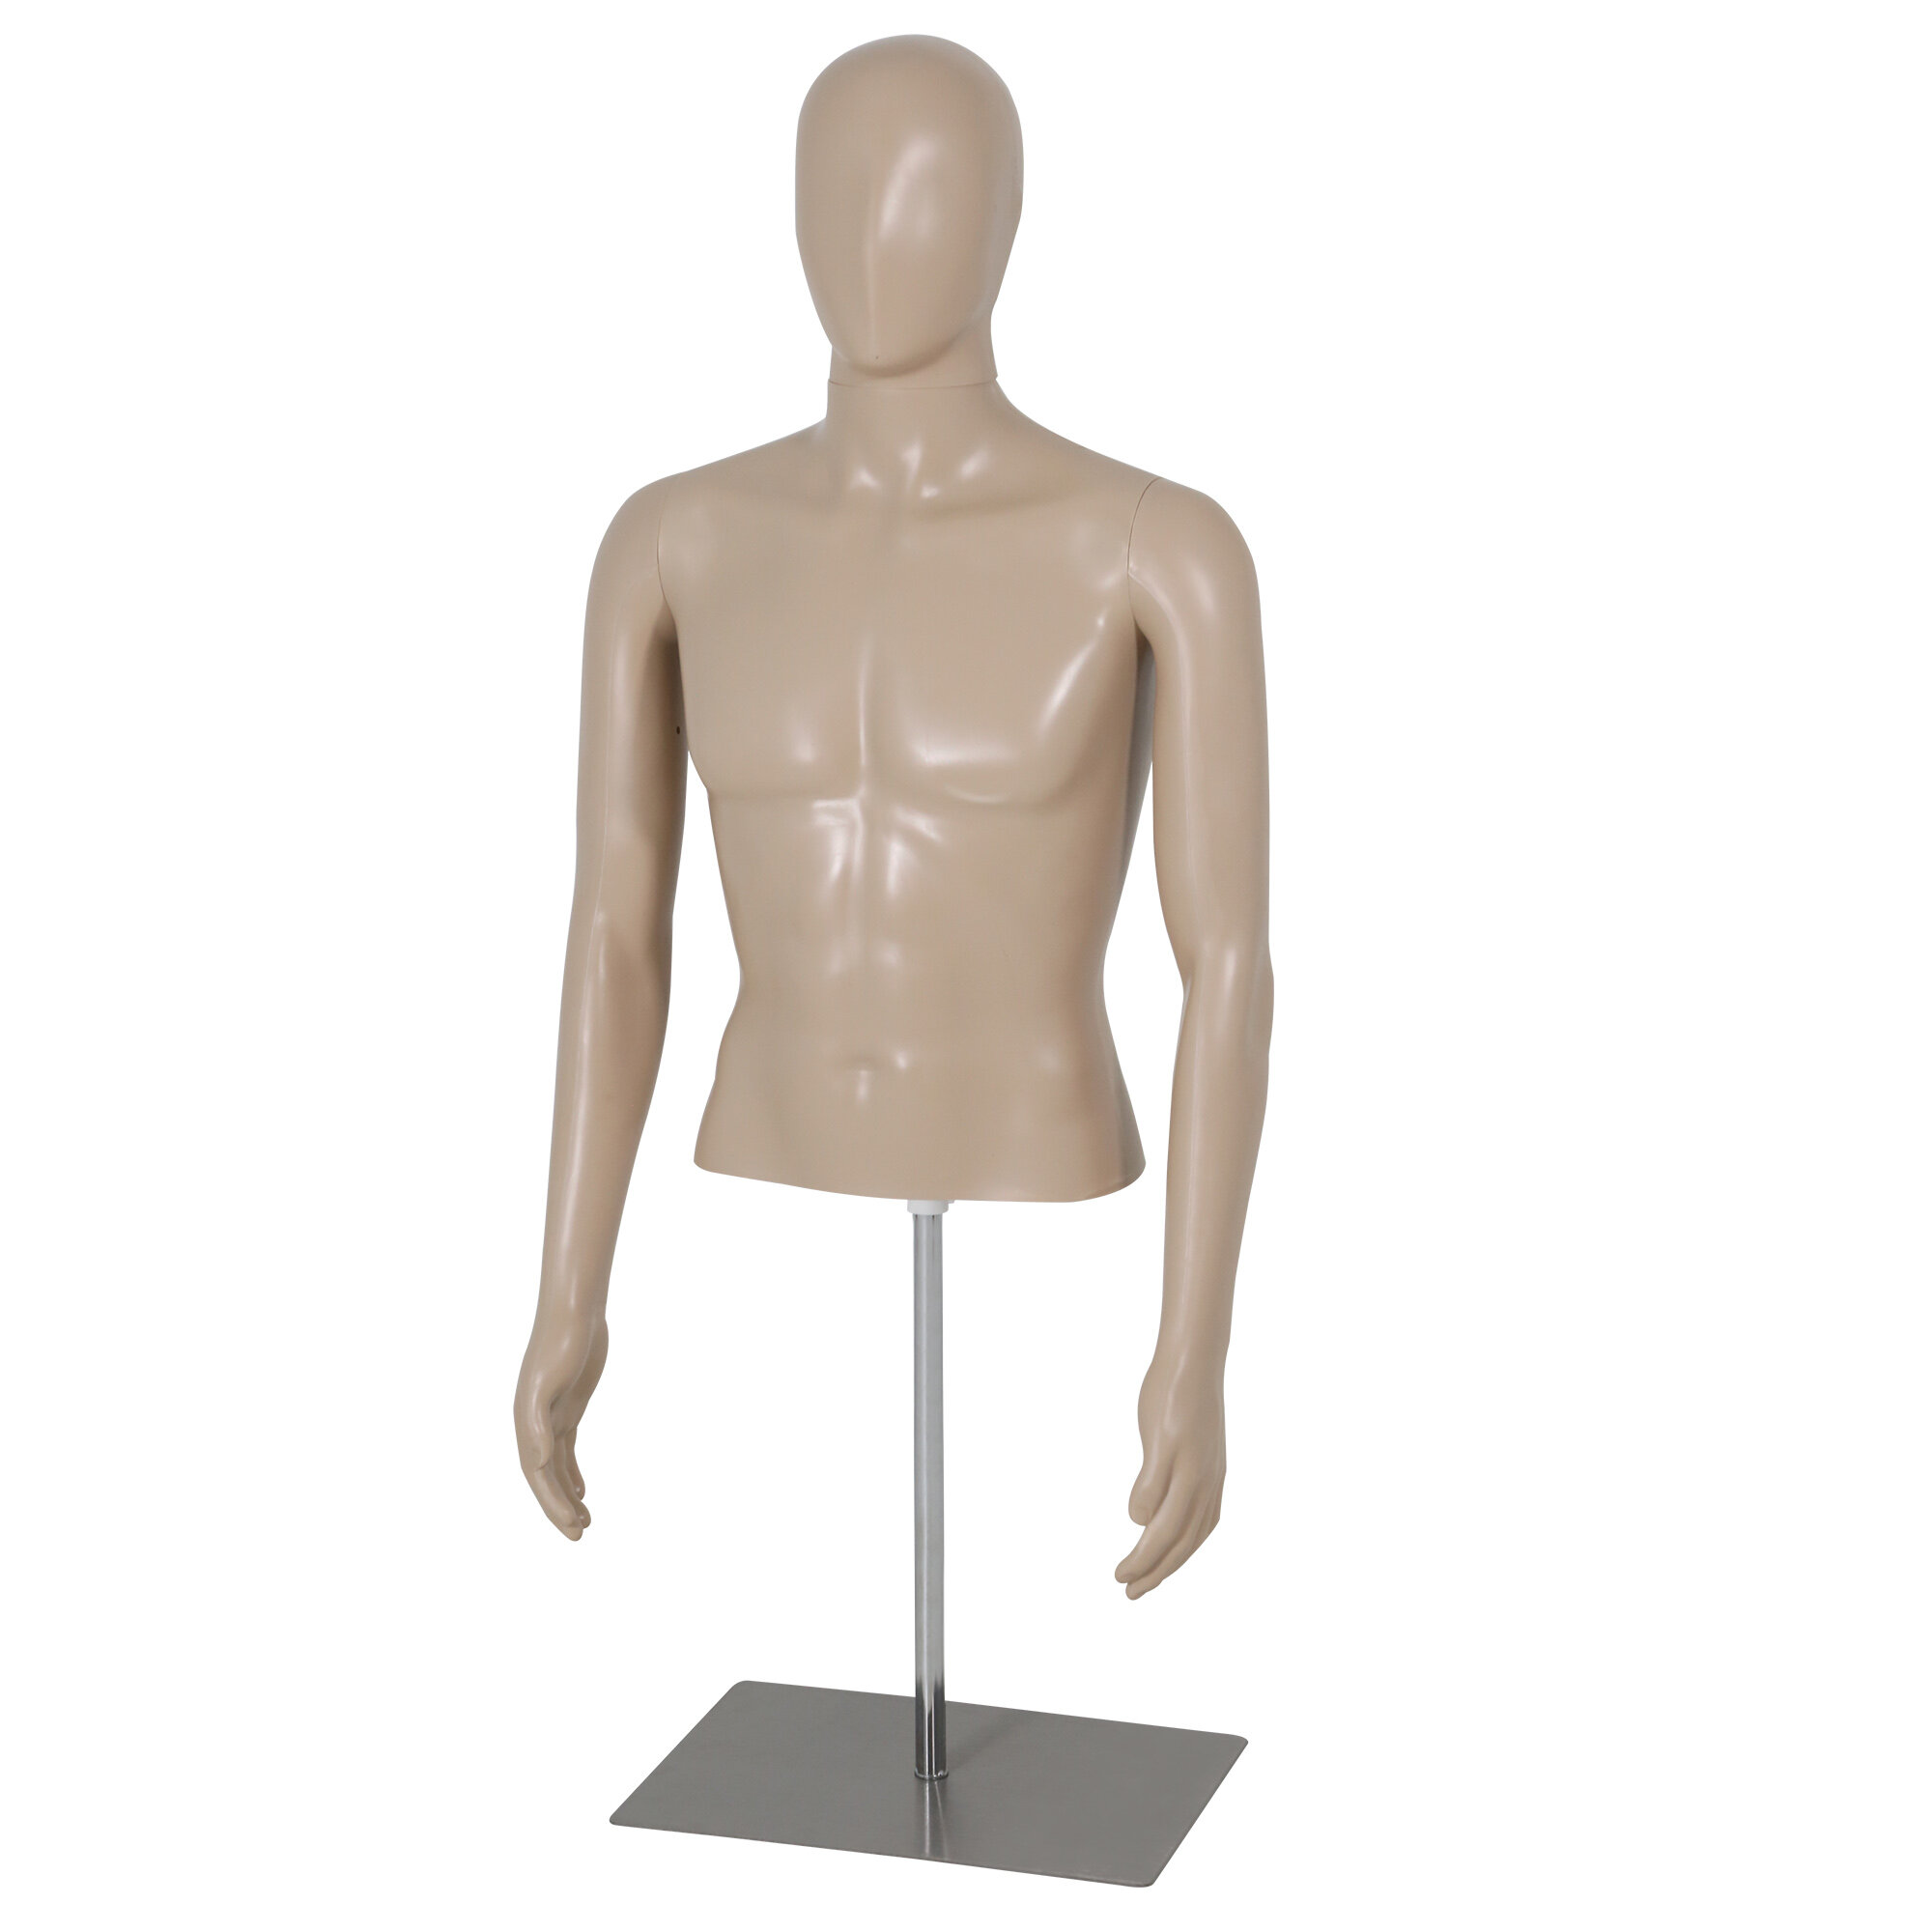 Egghead boy sport mannequin Torso Display Dress Form #MZ-YD-K06 